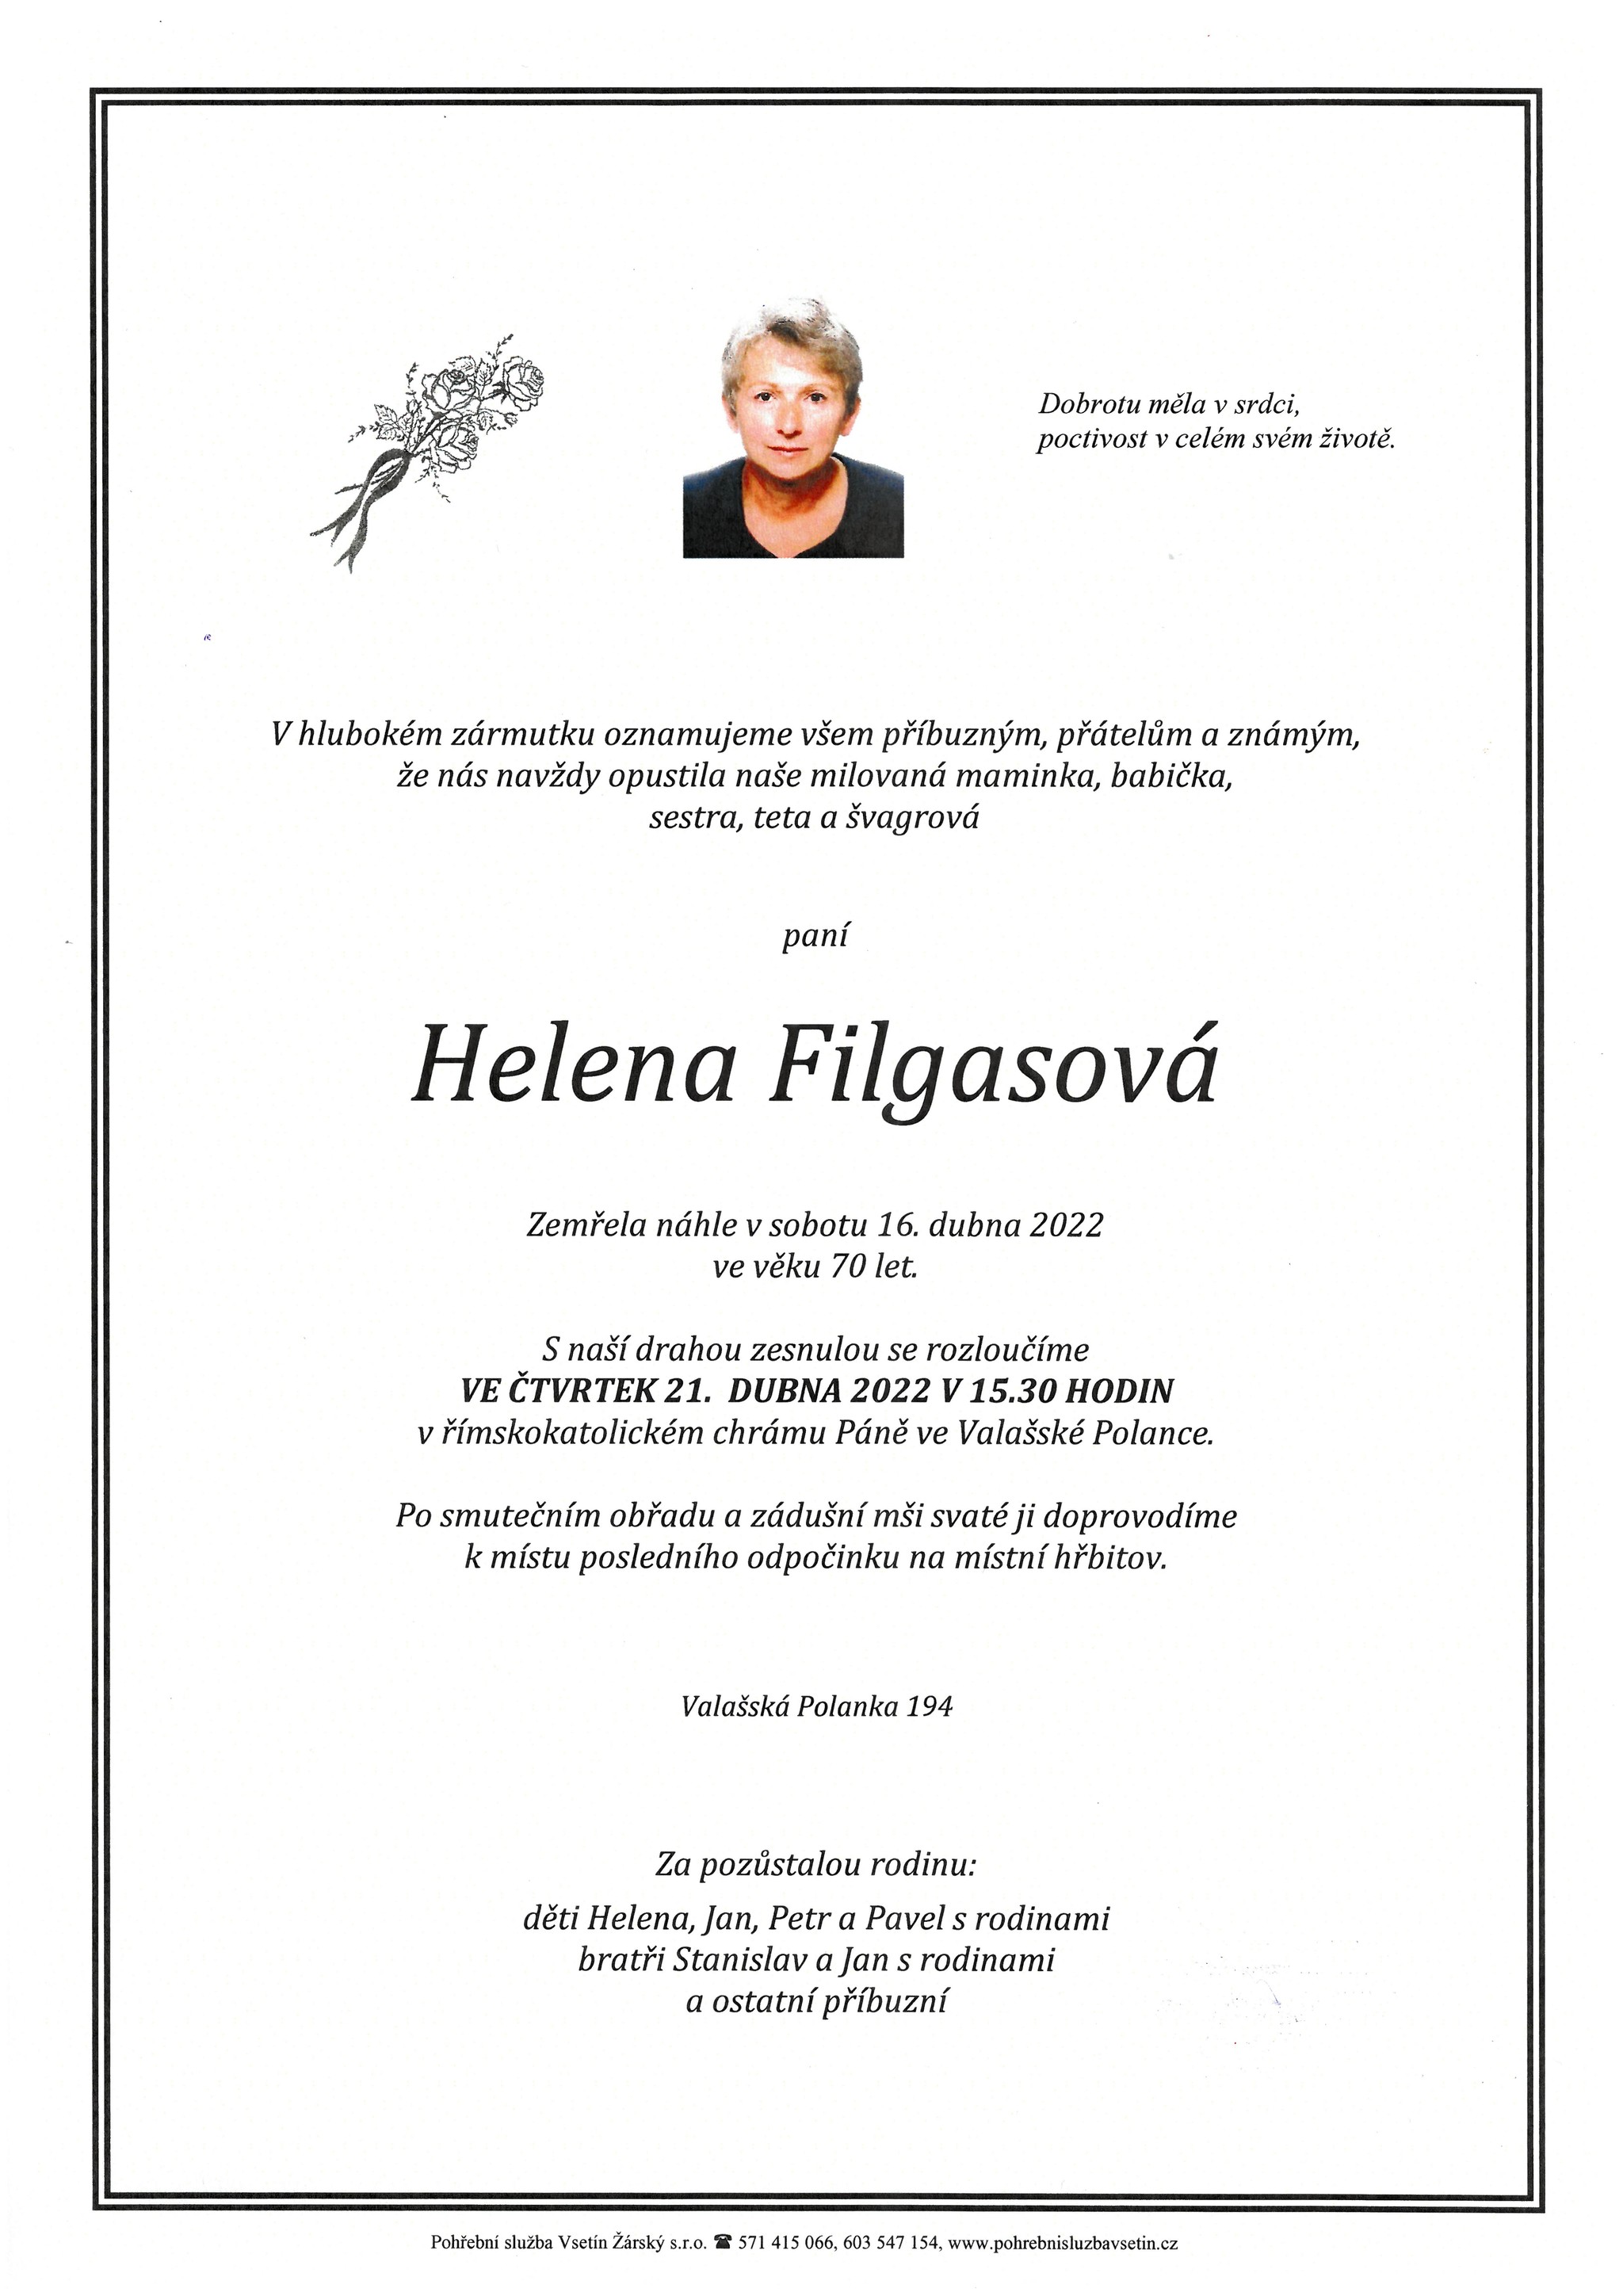 Helena Filgasová